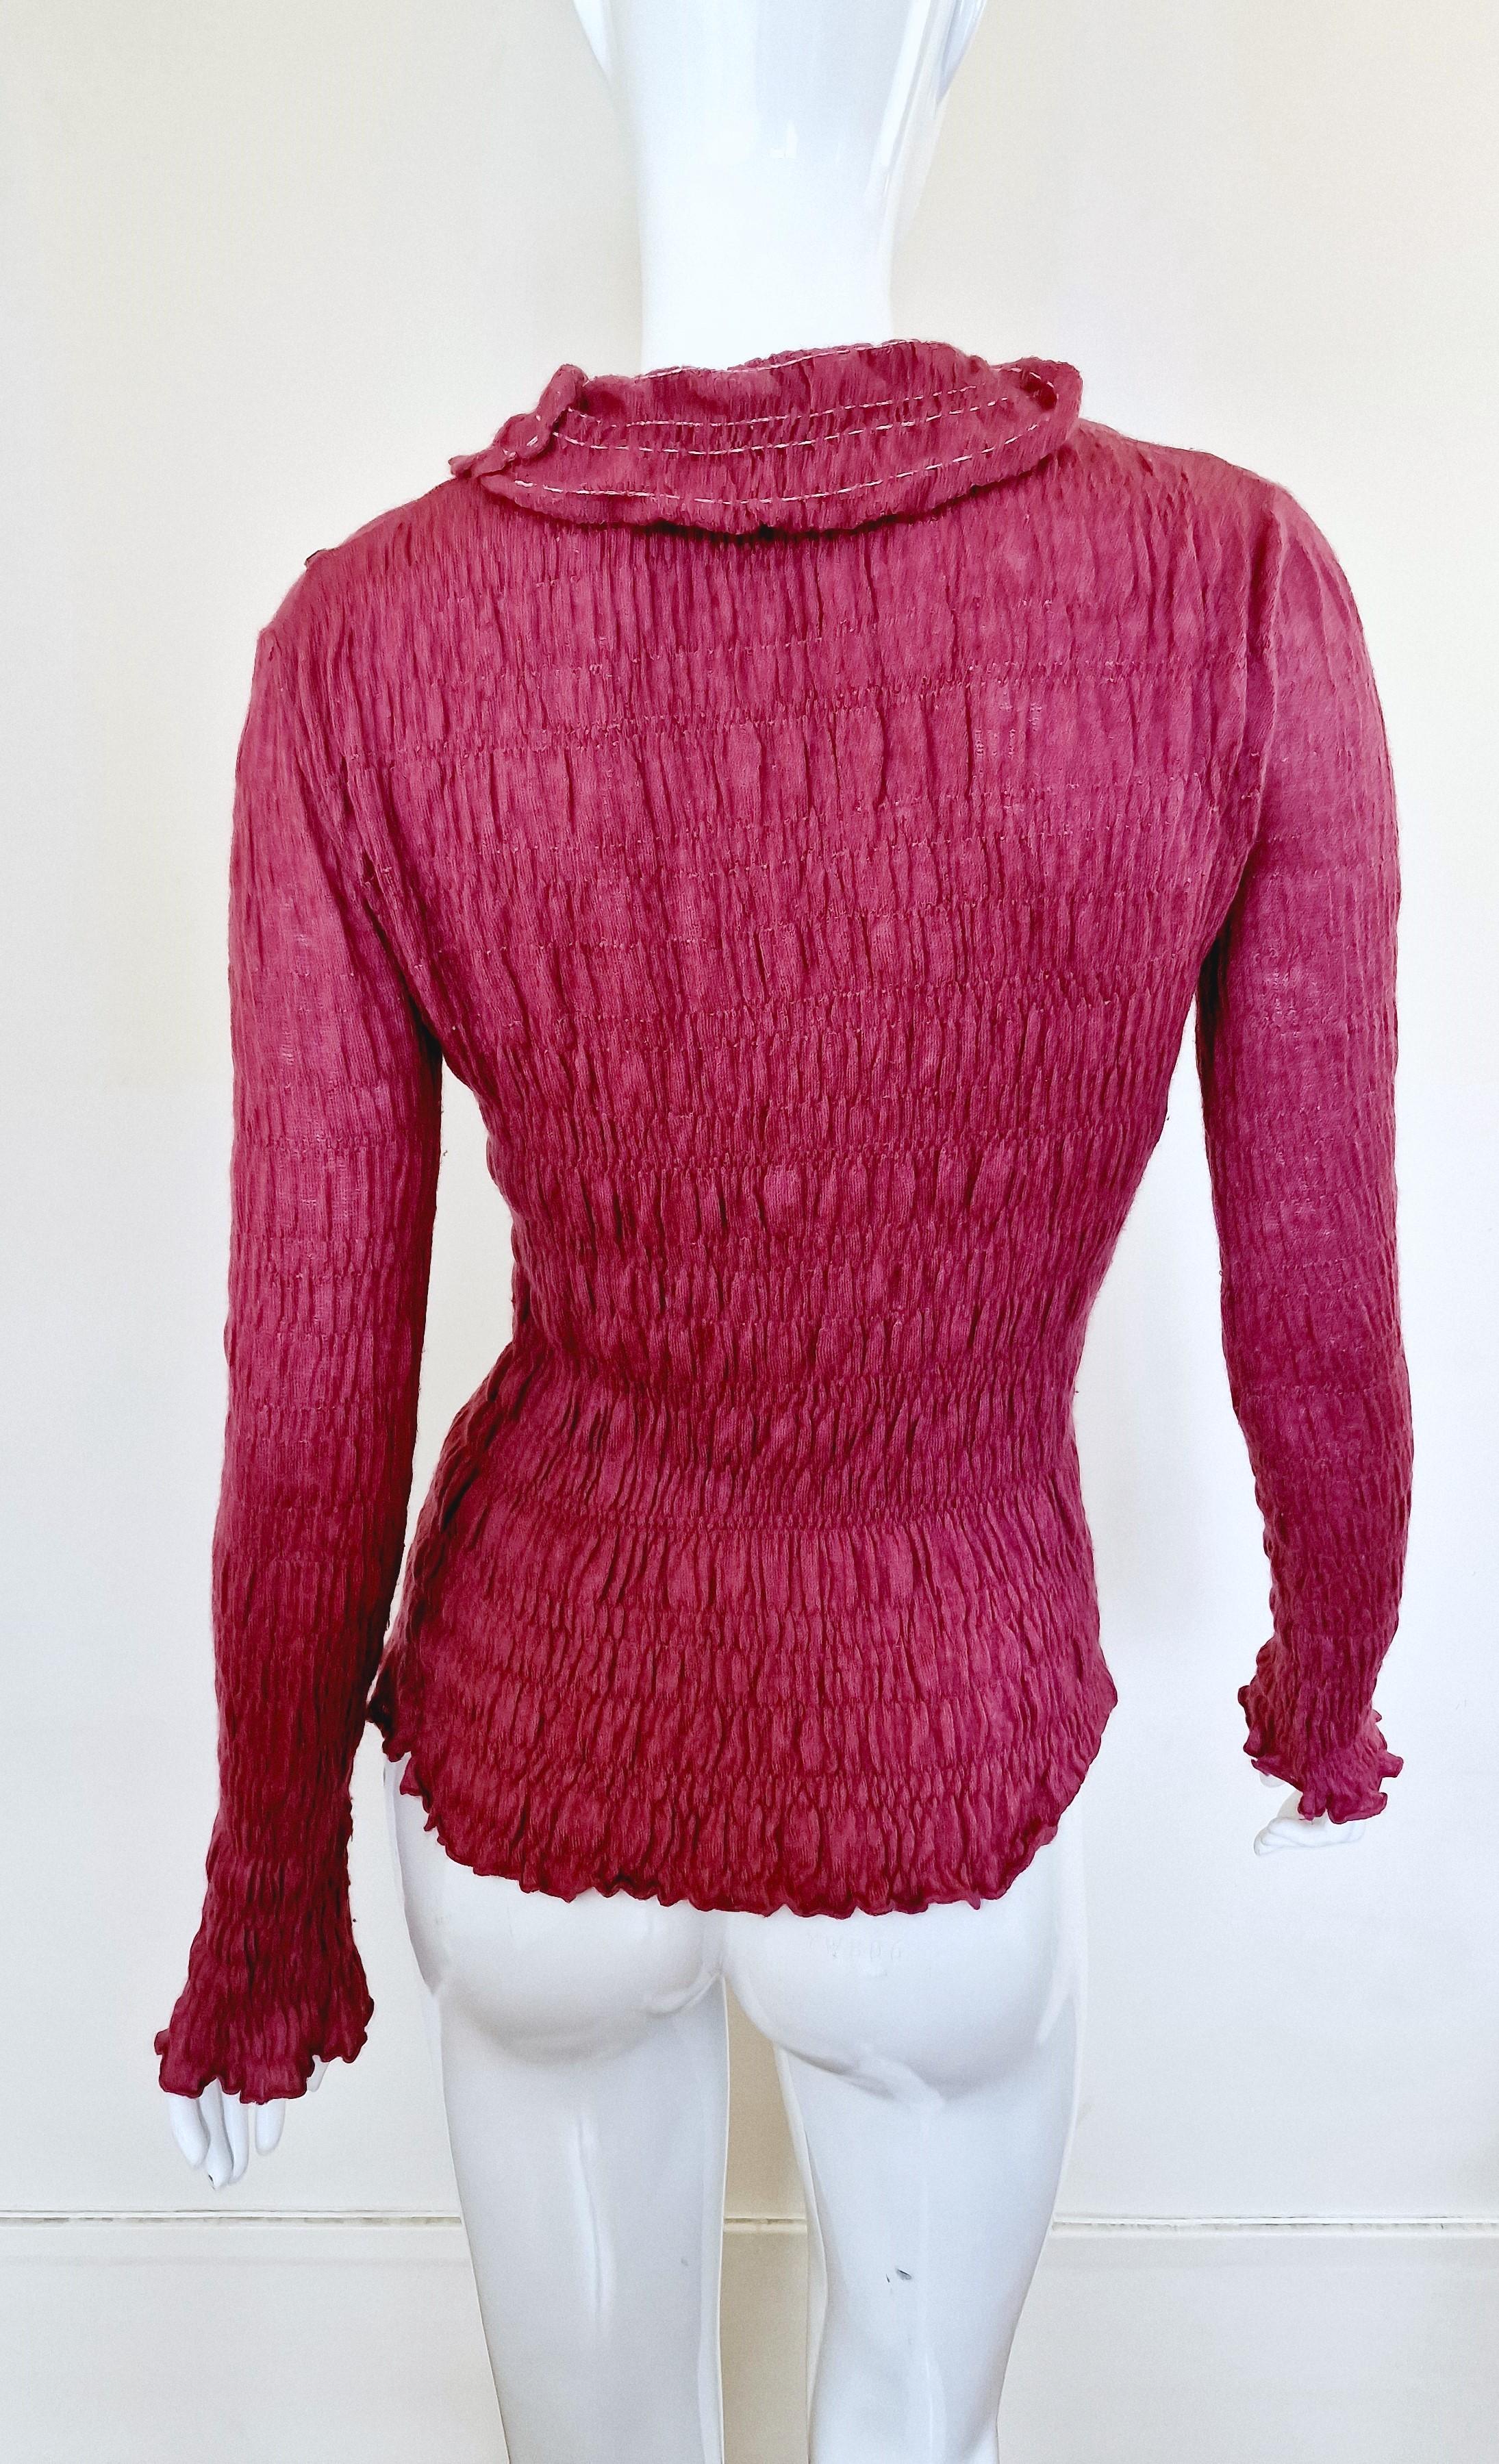 Christian Dior Bondage Straps Strap J'adore Cachmire Silk Sweater Shirt Tee Top  For Sale 6